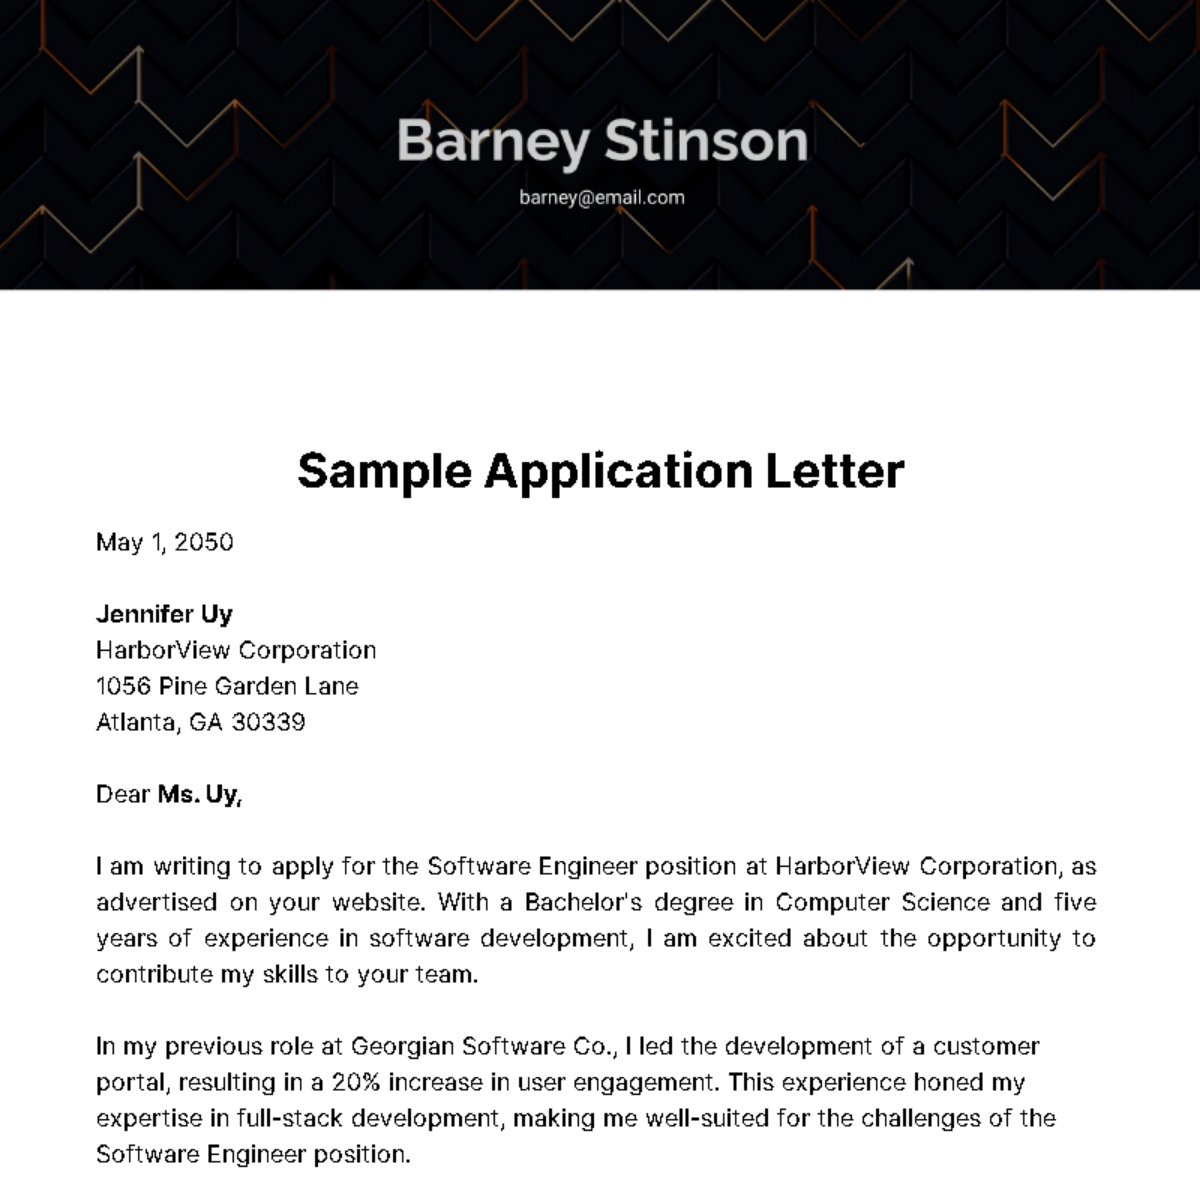 Sample Application Letter  Template